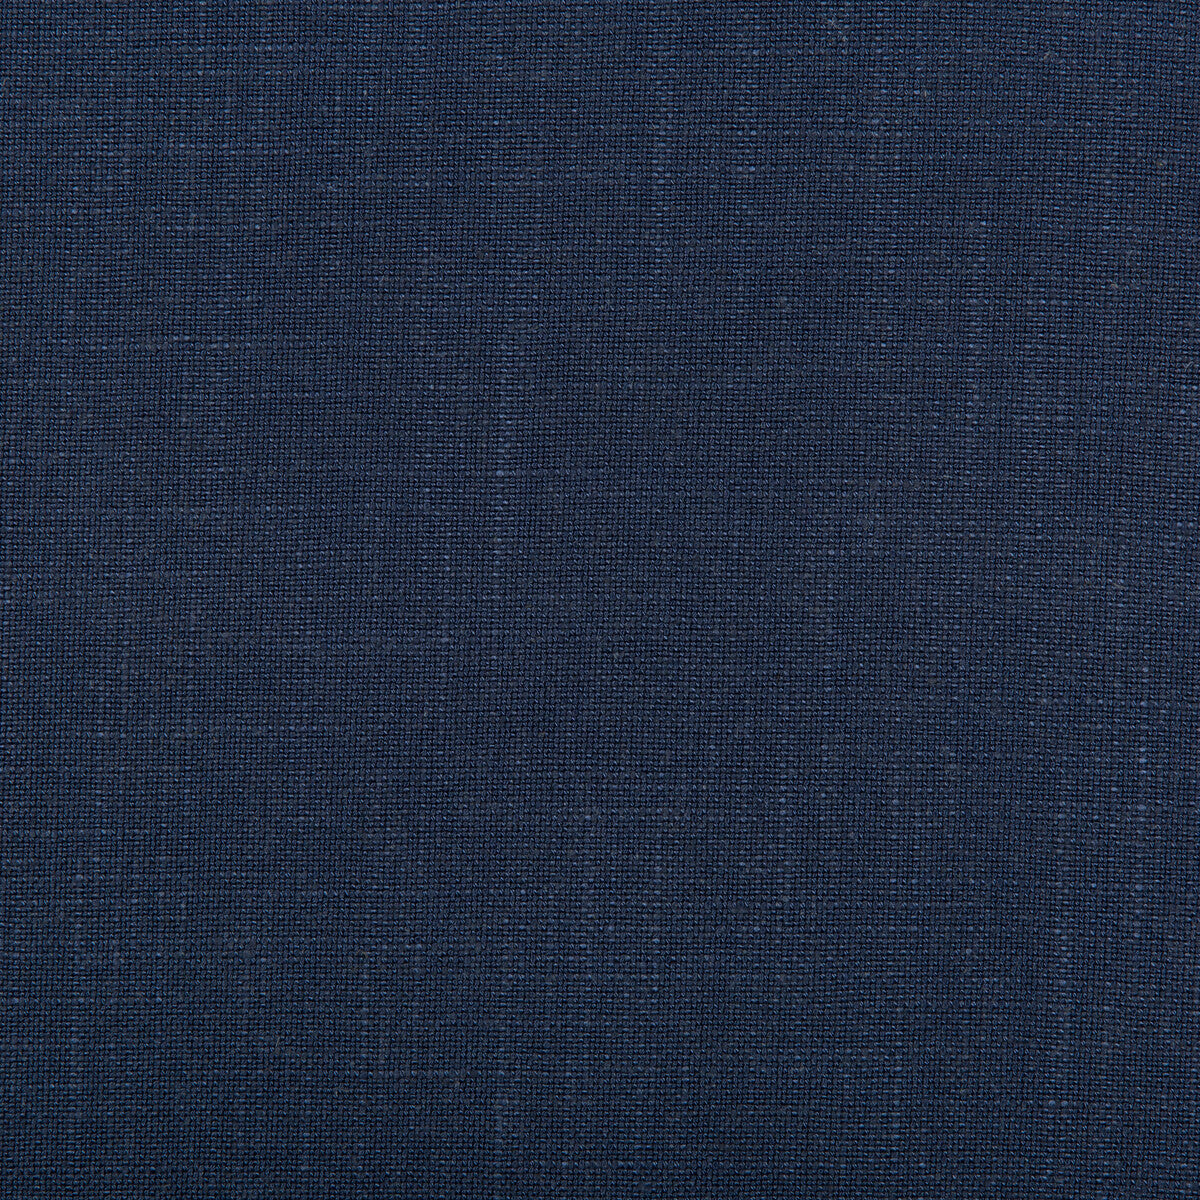 Aura fabric in lapis color - pattern 35520.55.0 - by Kravet Design